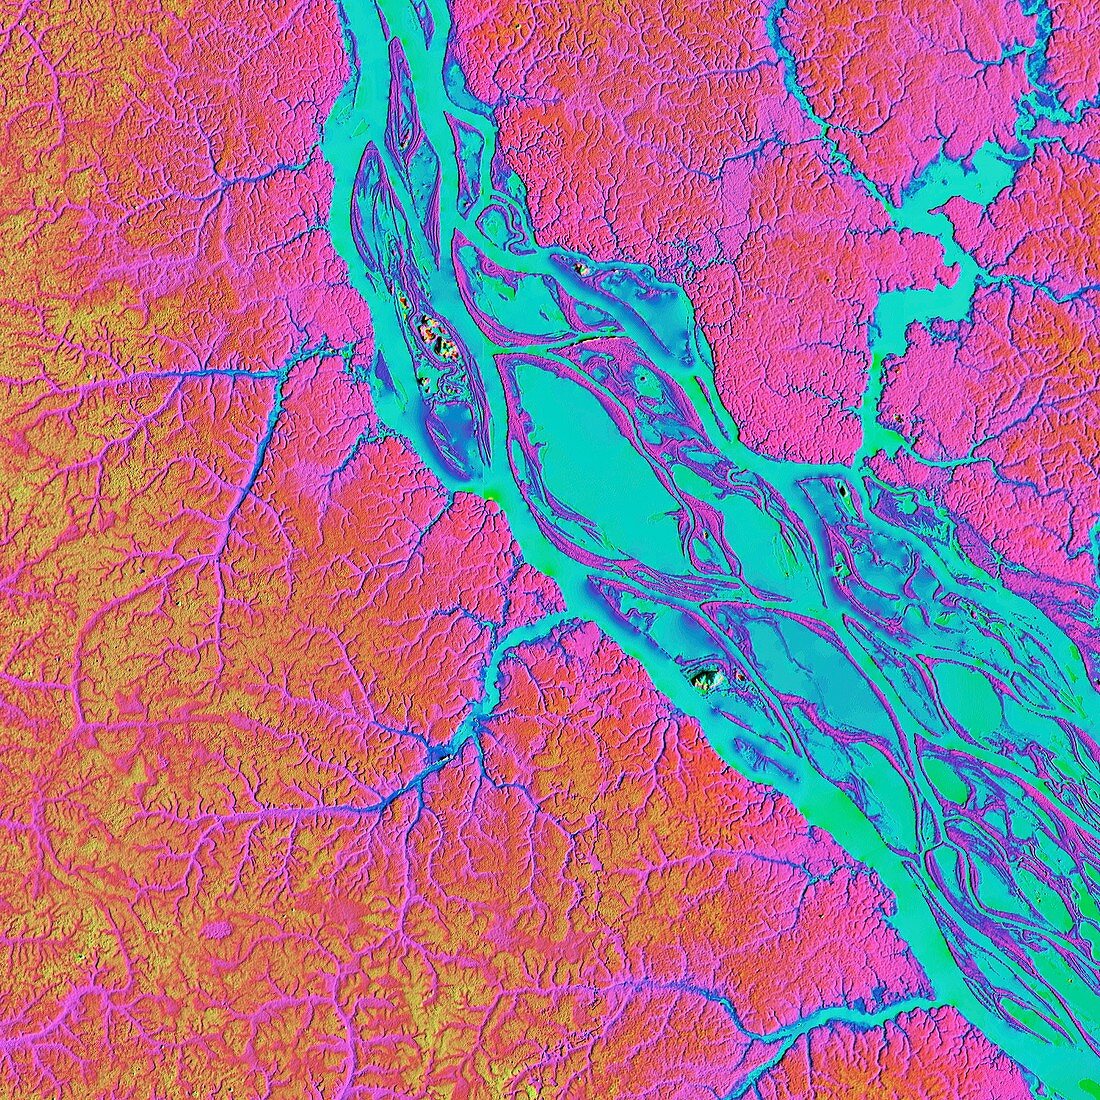 Rio Negro in the Amazon, LiDAR satellite image